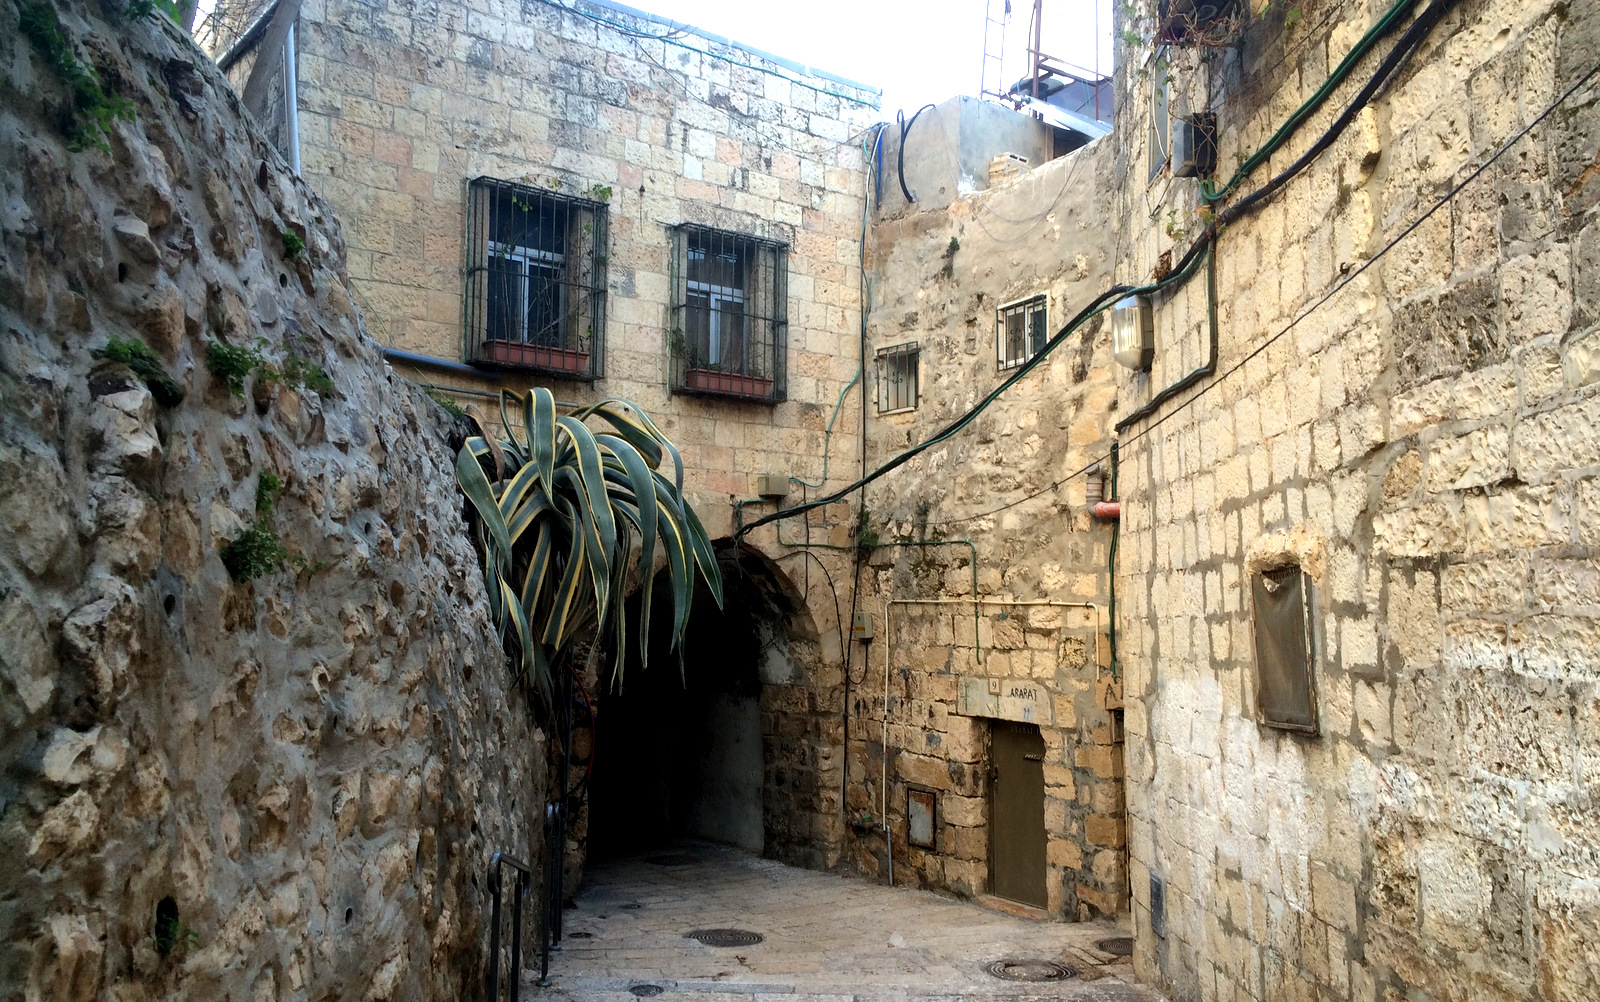 Narrow streets in Jerusalem